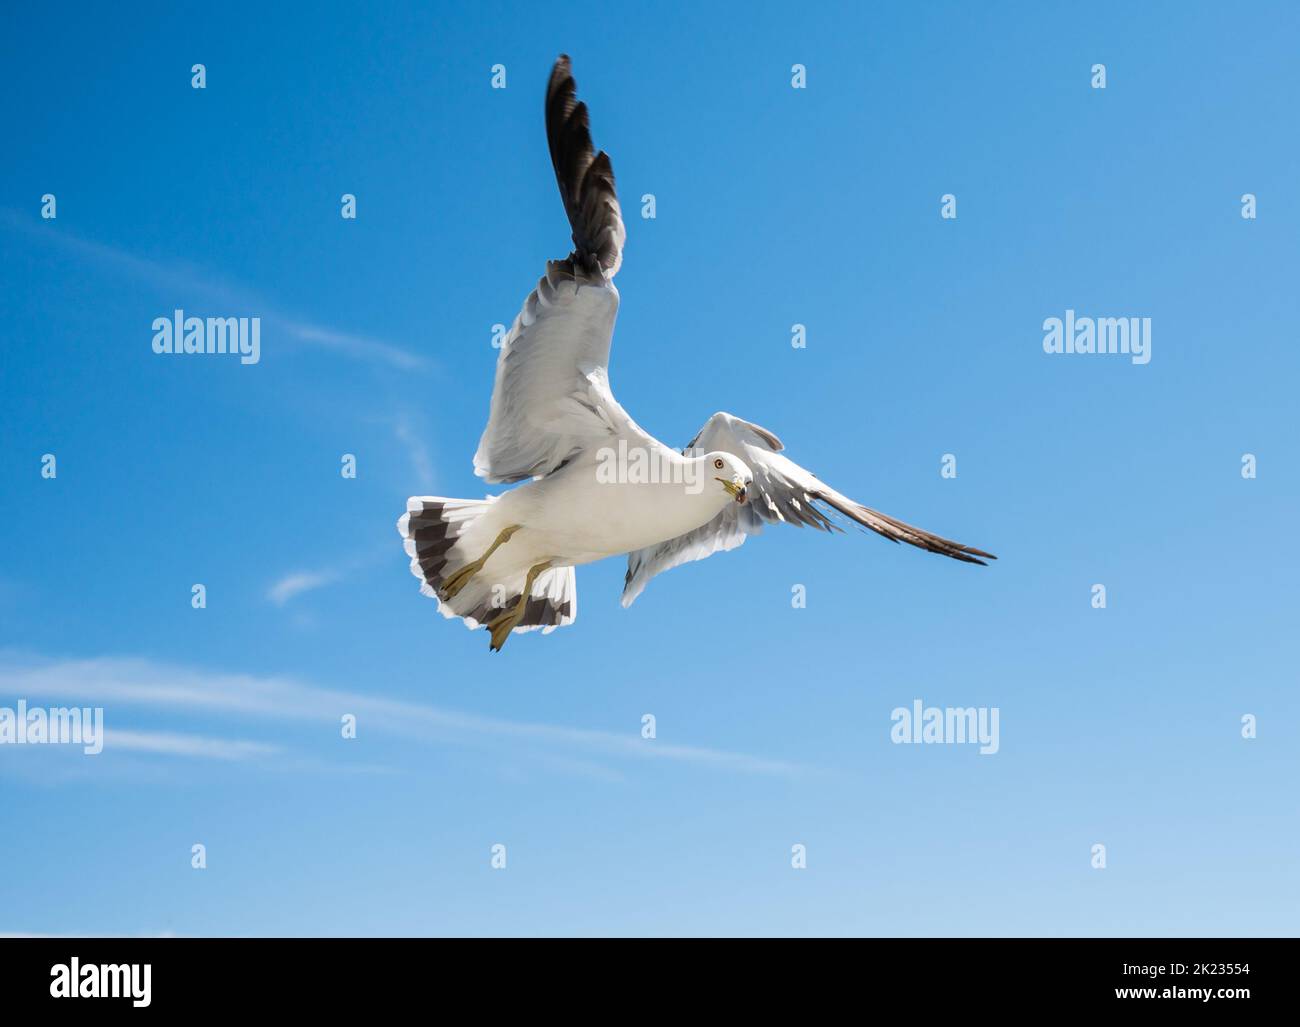 Flying seagull over blue sky. Stock Photo